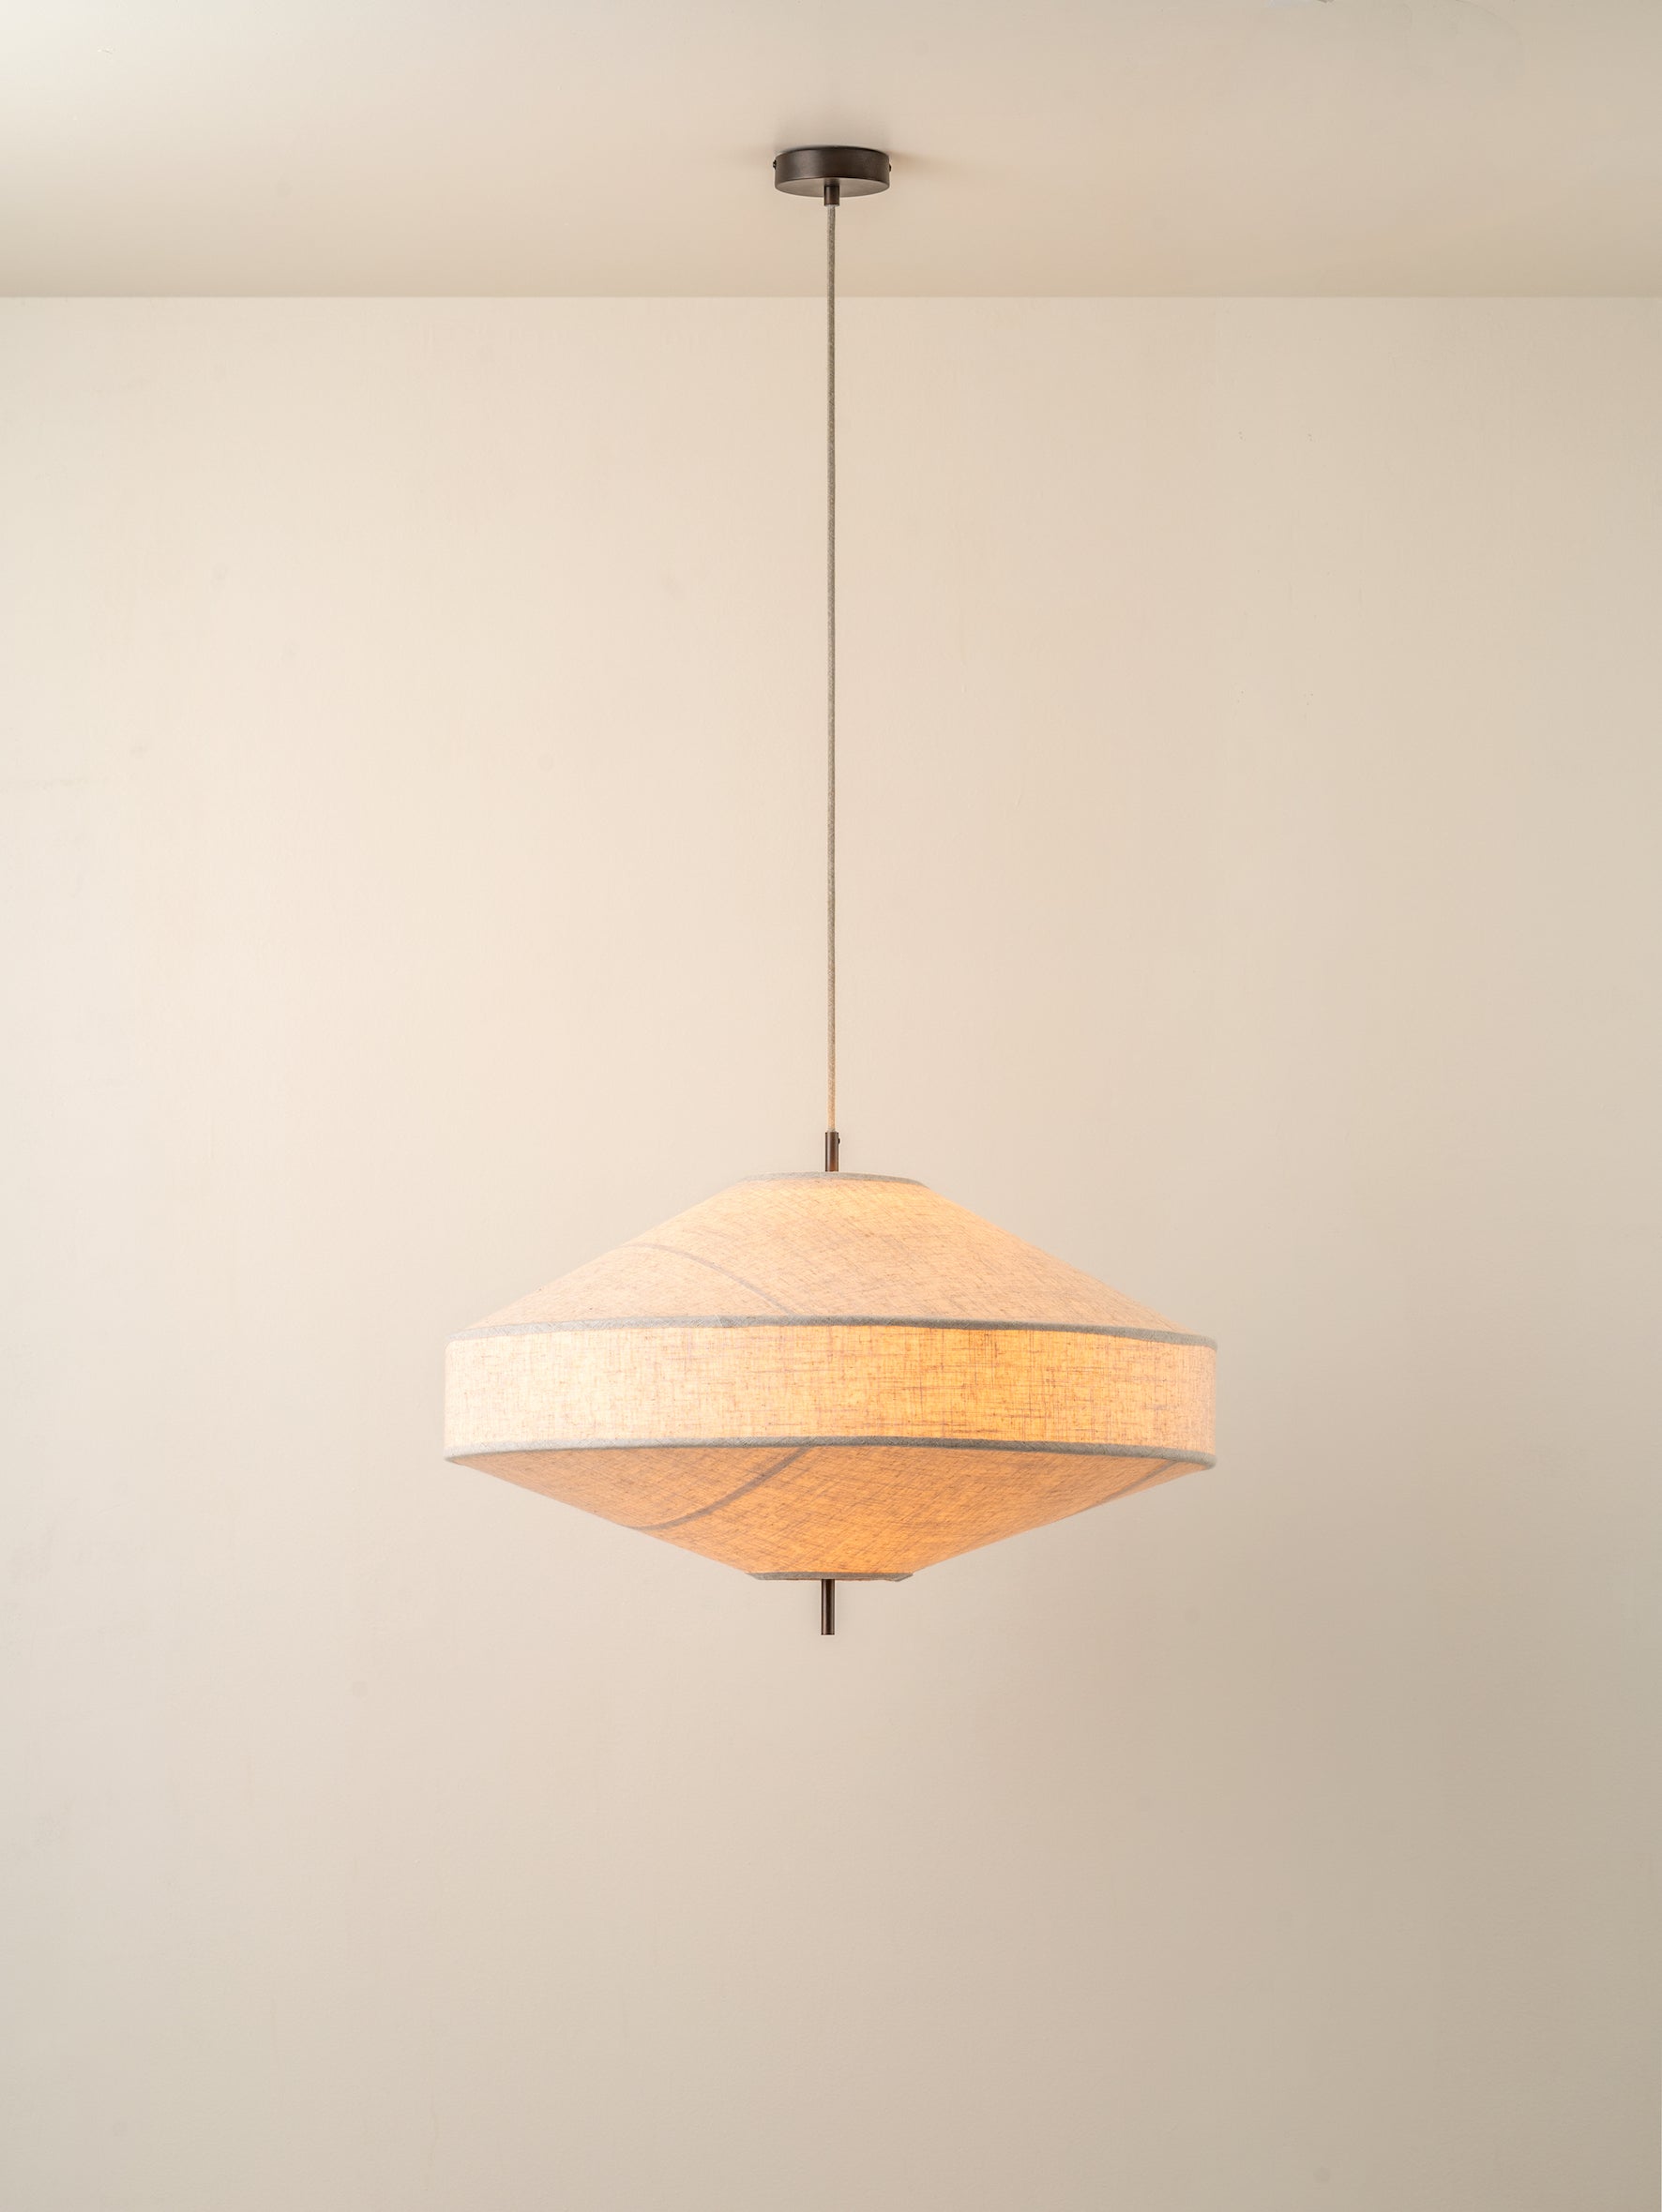 Solara - large aged brass and layered natural linen pendant | Ceiling Light | Lights & Lamps | UK | Modern Affordable Designer Lighting